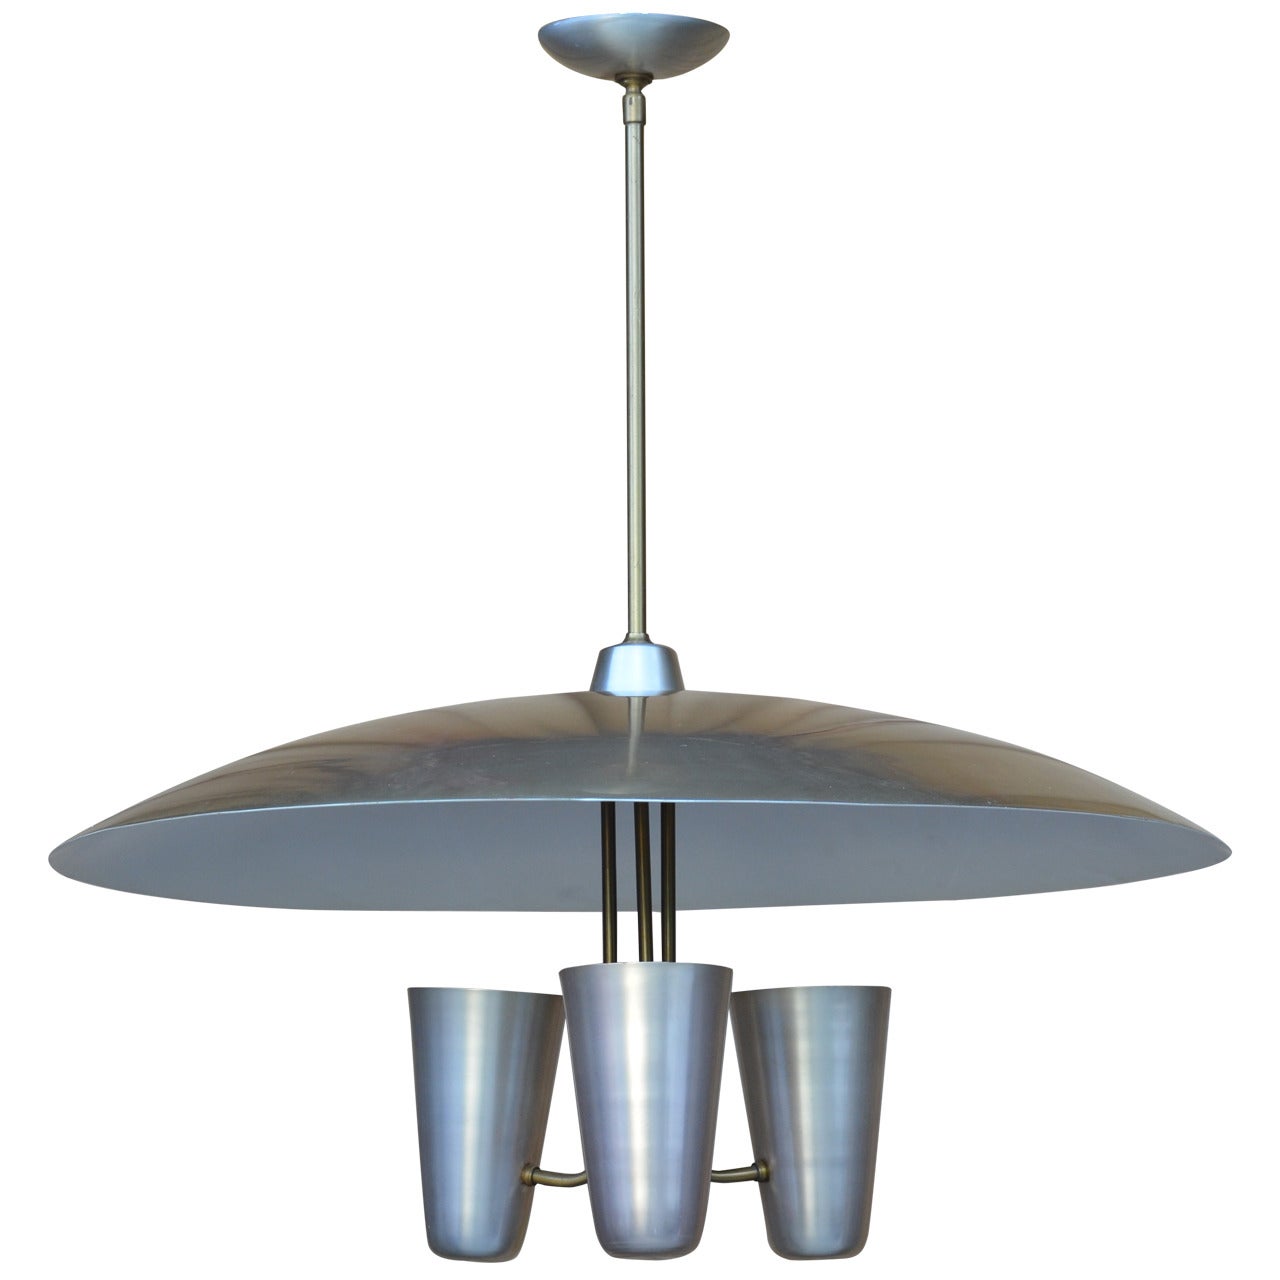 Spectacular Gerald Thurston Indirect Light Ceiling Fixture for Lightolier